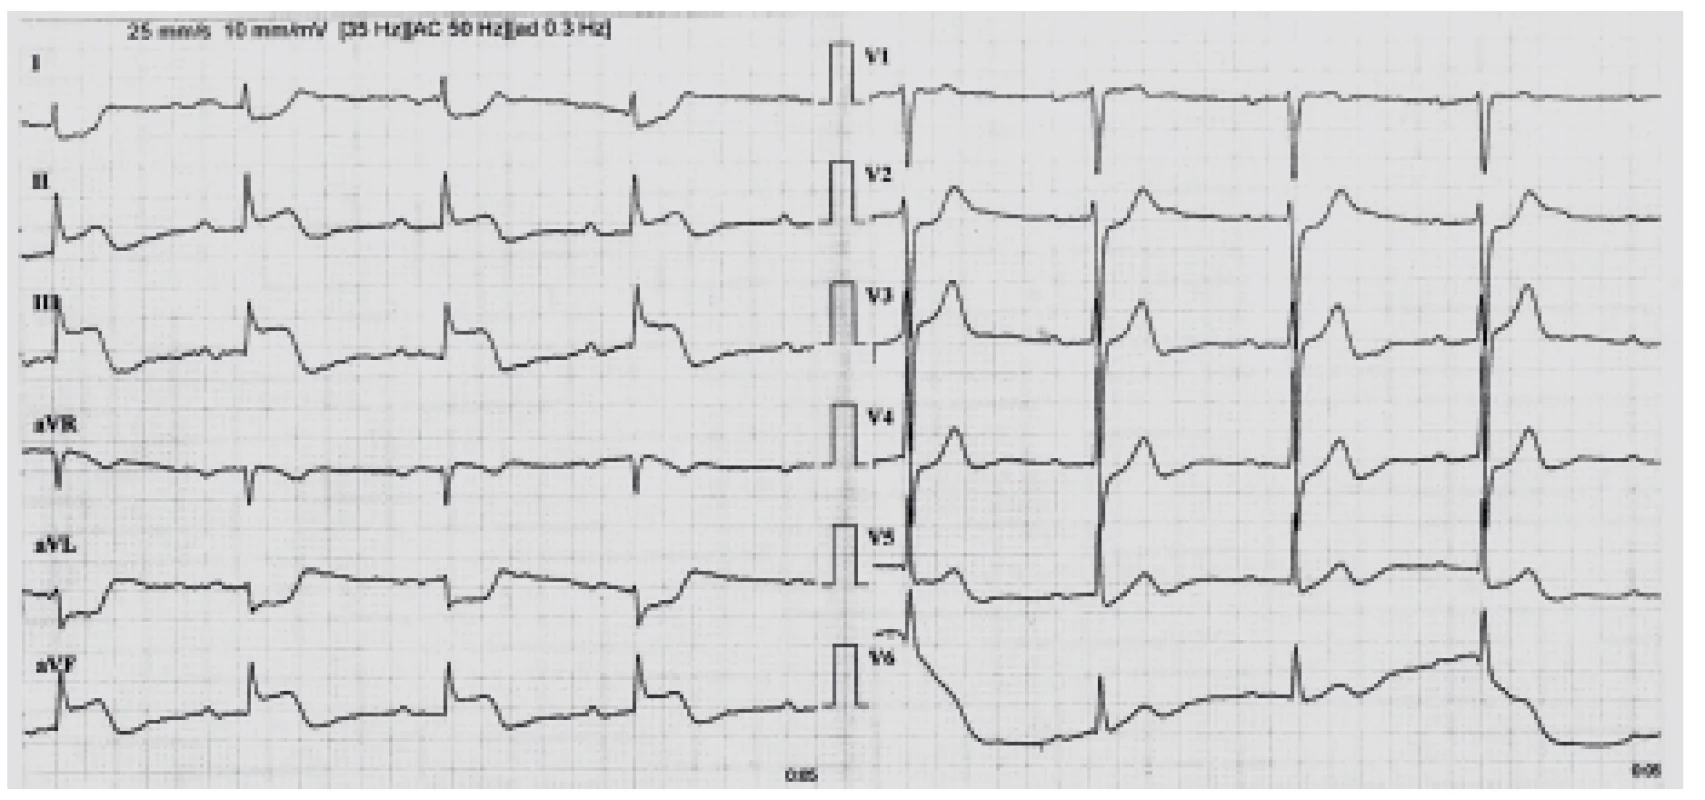 EKG křivka 2 během trombolýzy při konzultaci
kardiologa